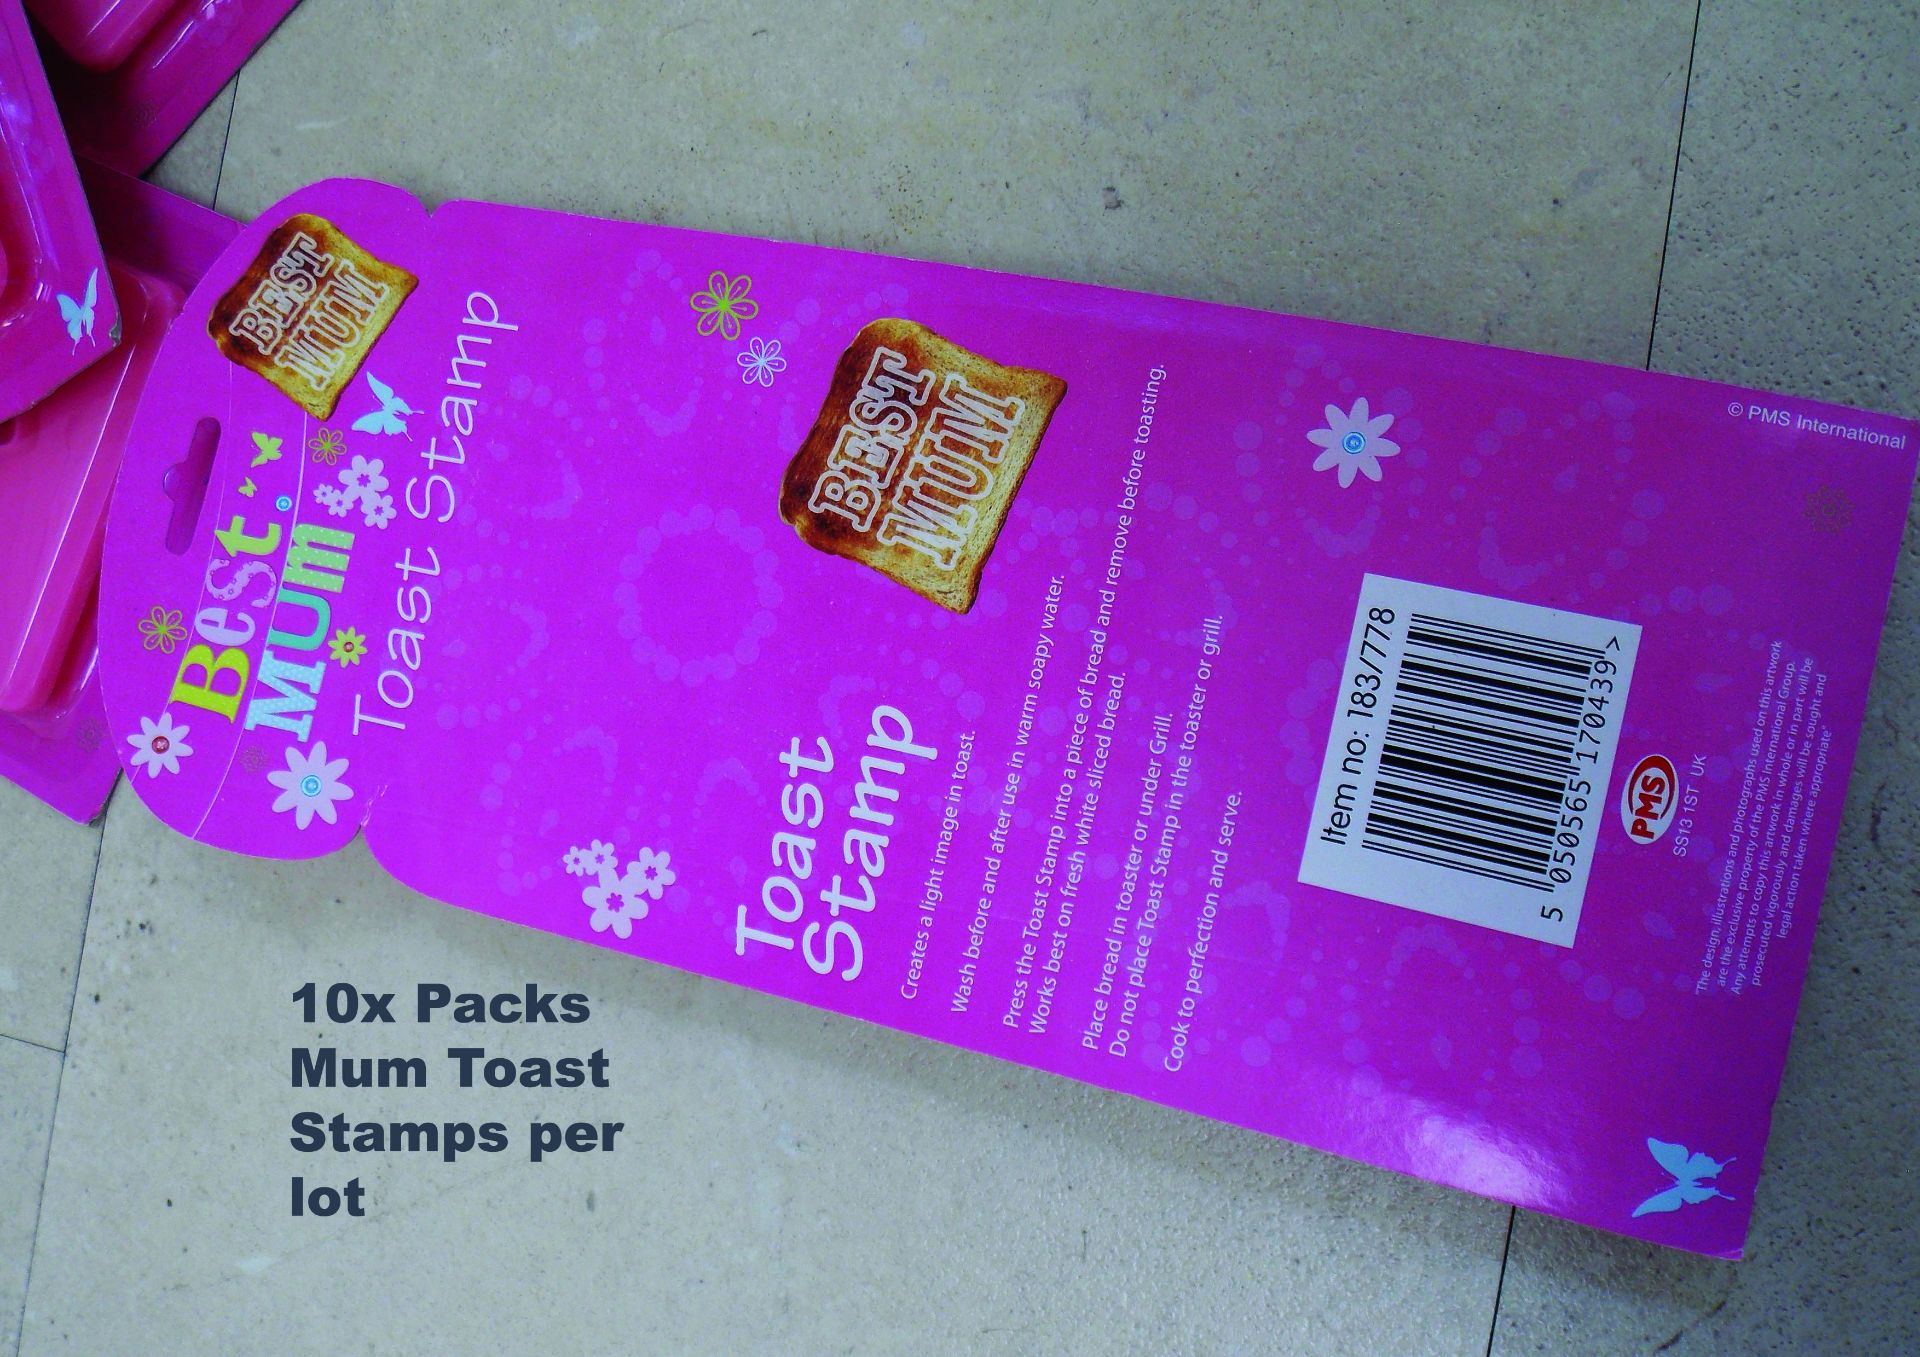 10x "Mum" Toast Stamp Sets - Image 5 of 5